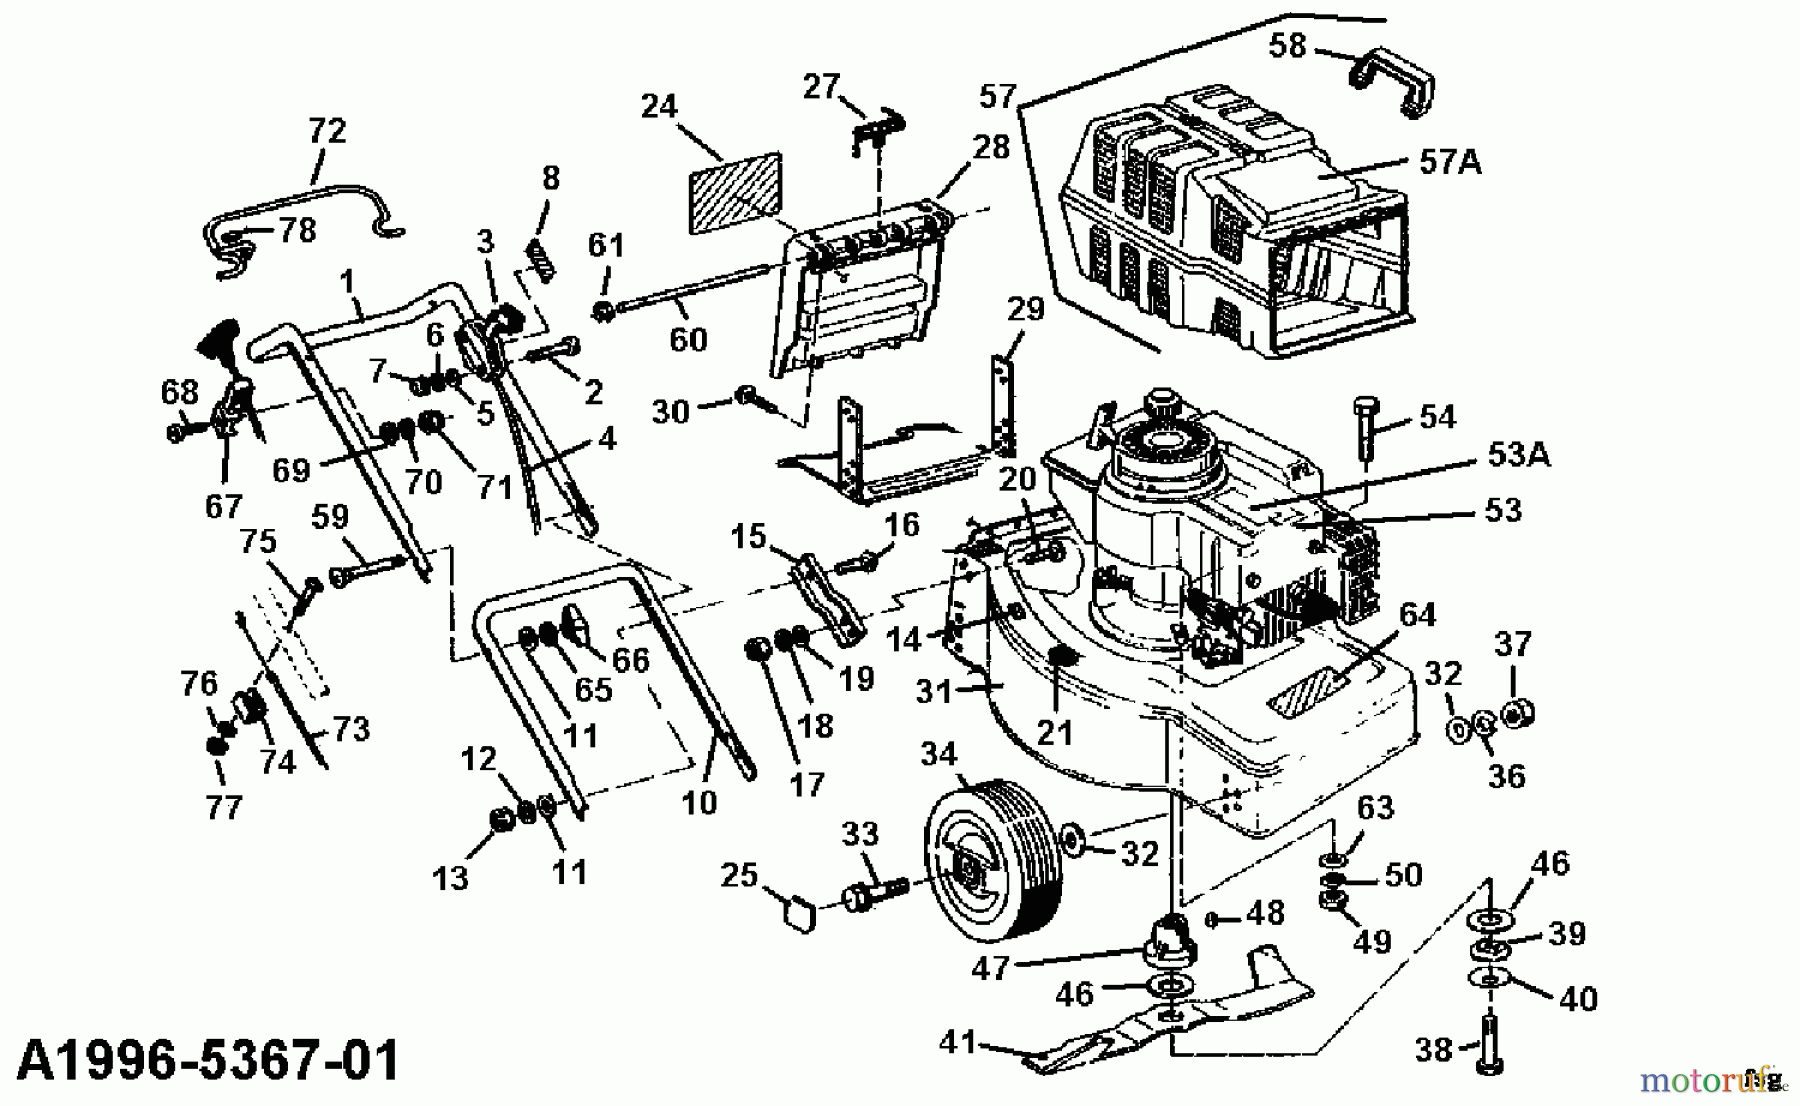  Golf Petrol mower B 04042.02  (1996) Basic machine